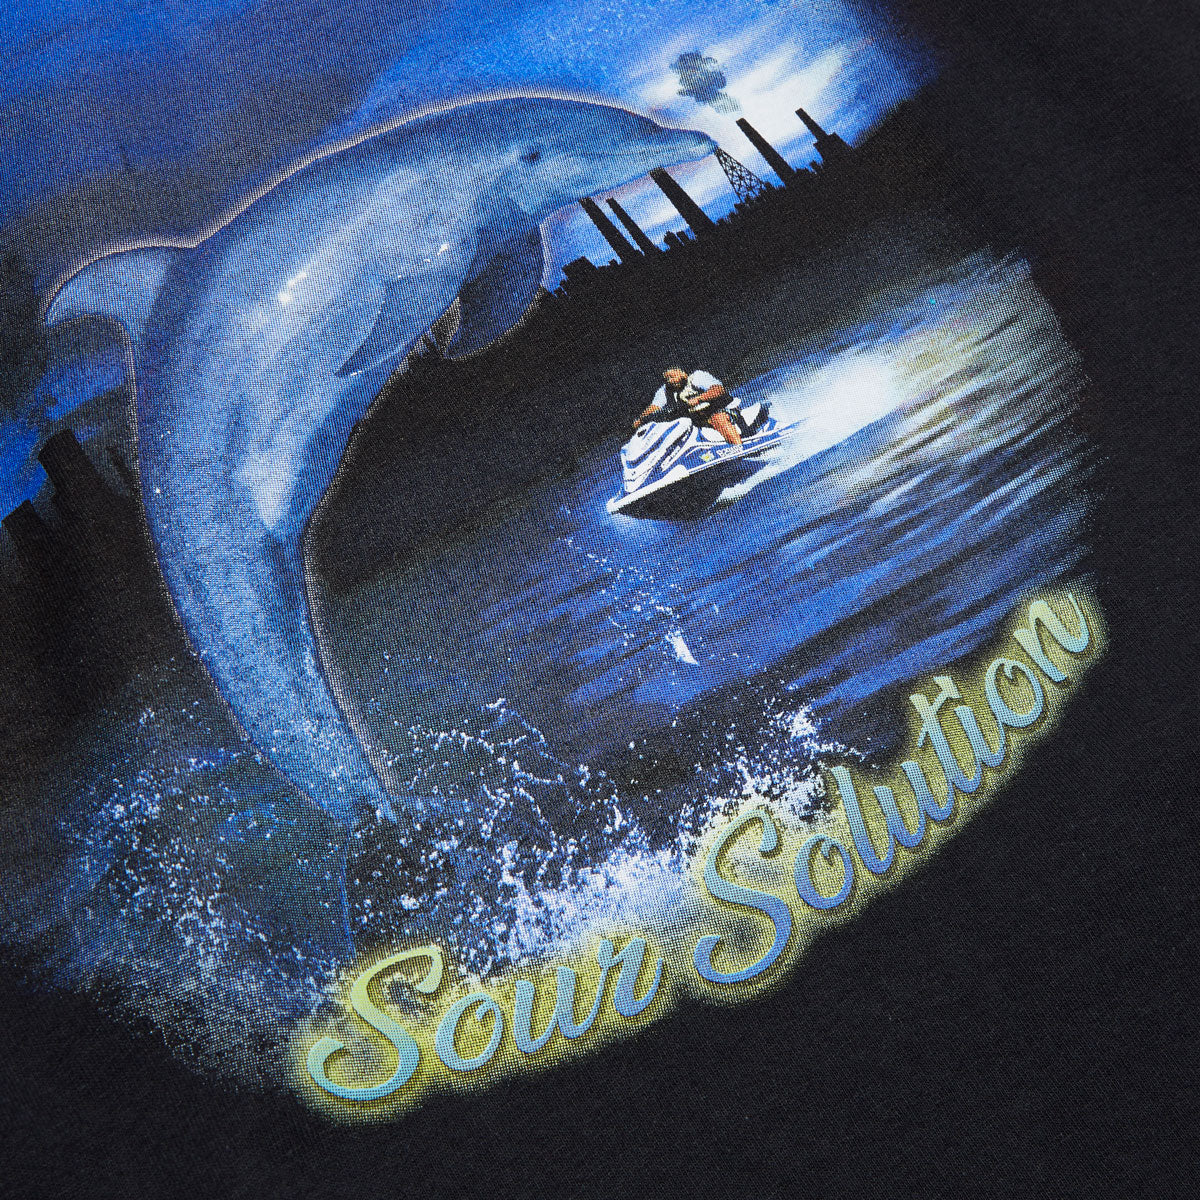 Sour Solution Dolphin T-Shirt - Black image 2